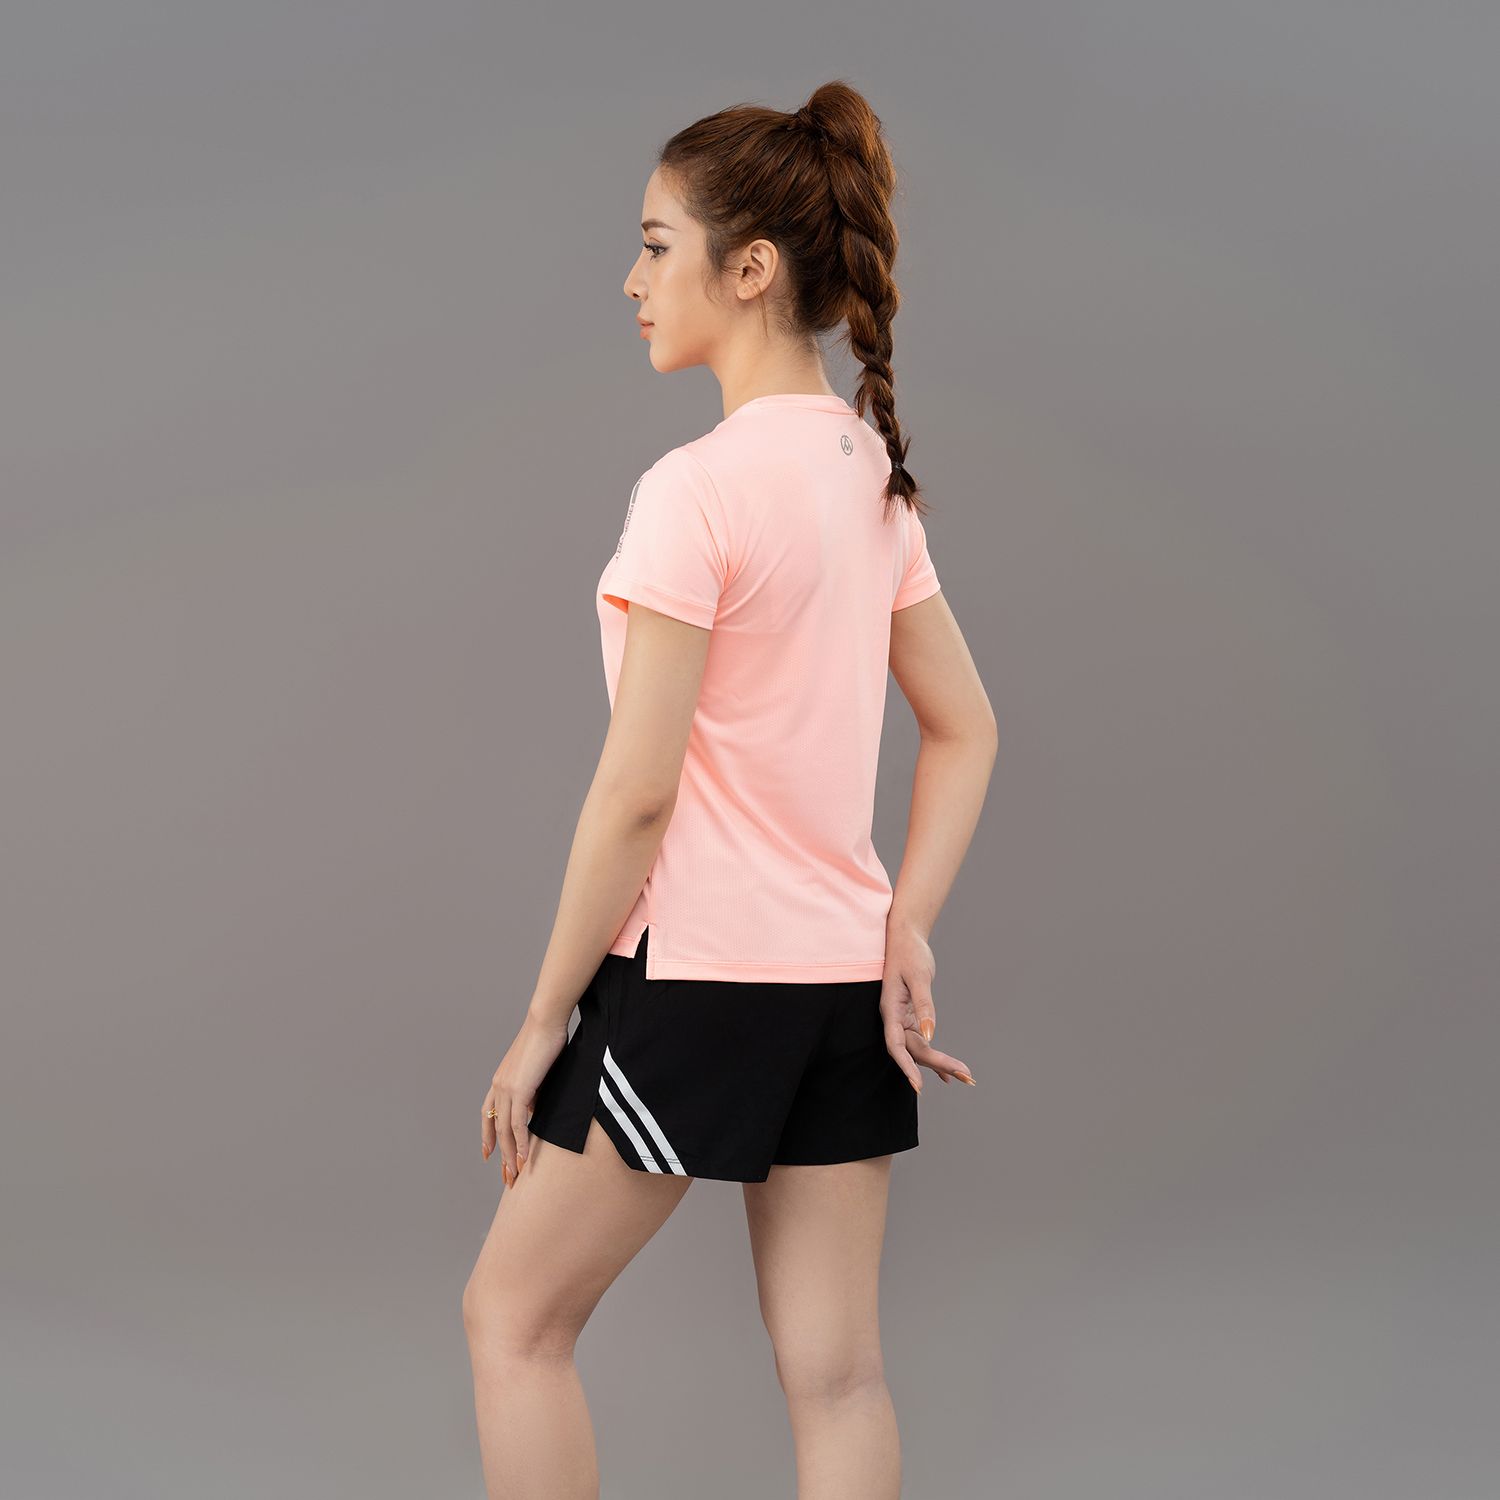  Áo Tshirt nữ AM màu hồng TSW2301-66 